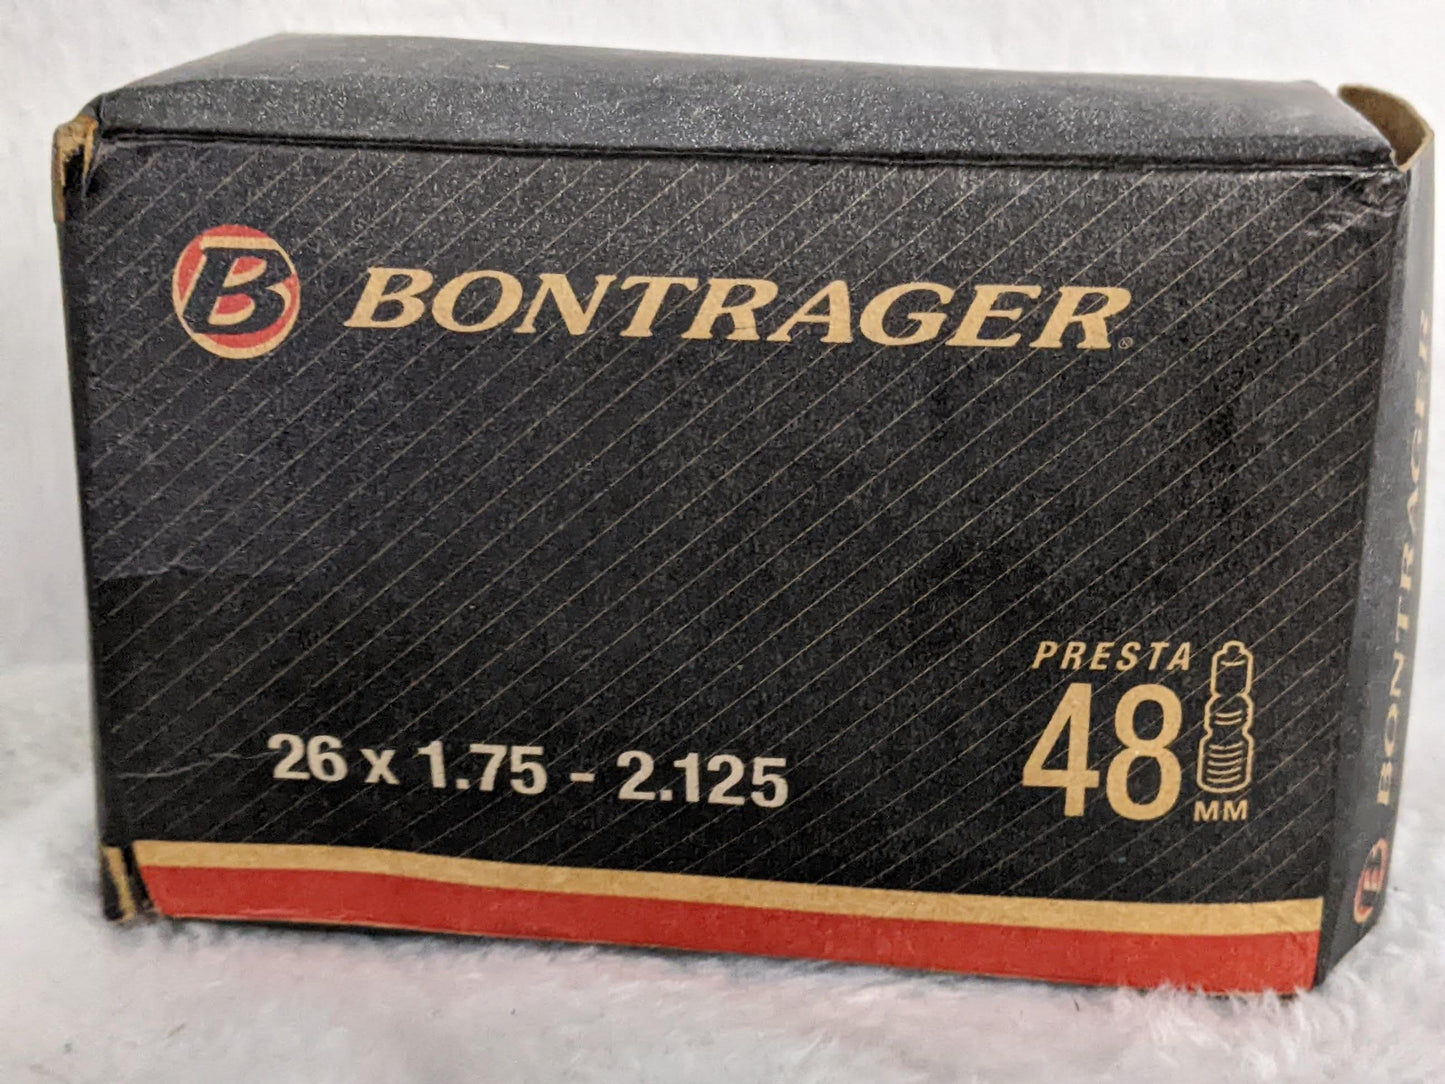 Bontrager Presta Bike Inner Tube Size 26 x 1.75 -2.215 Color Black Condition New